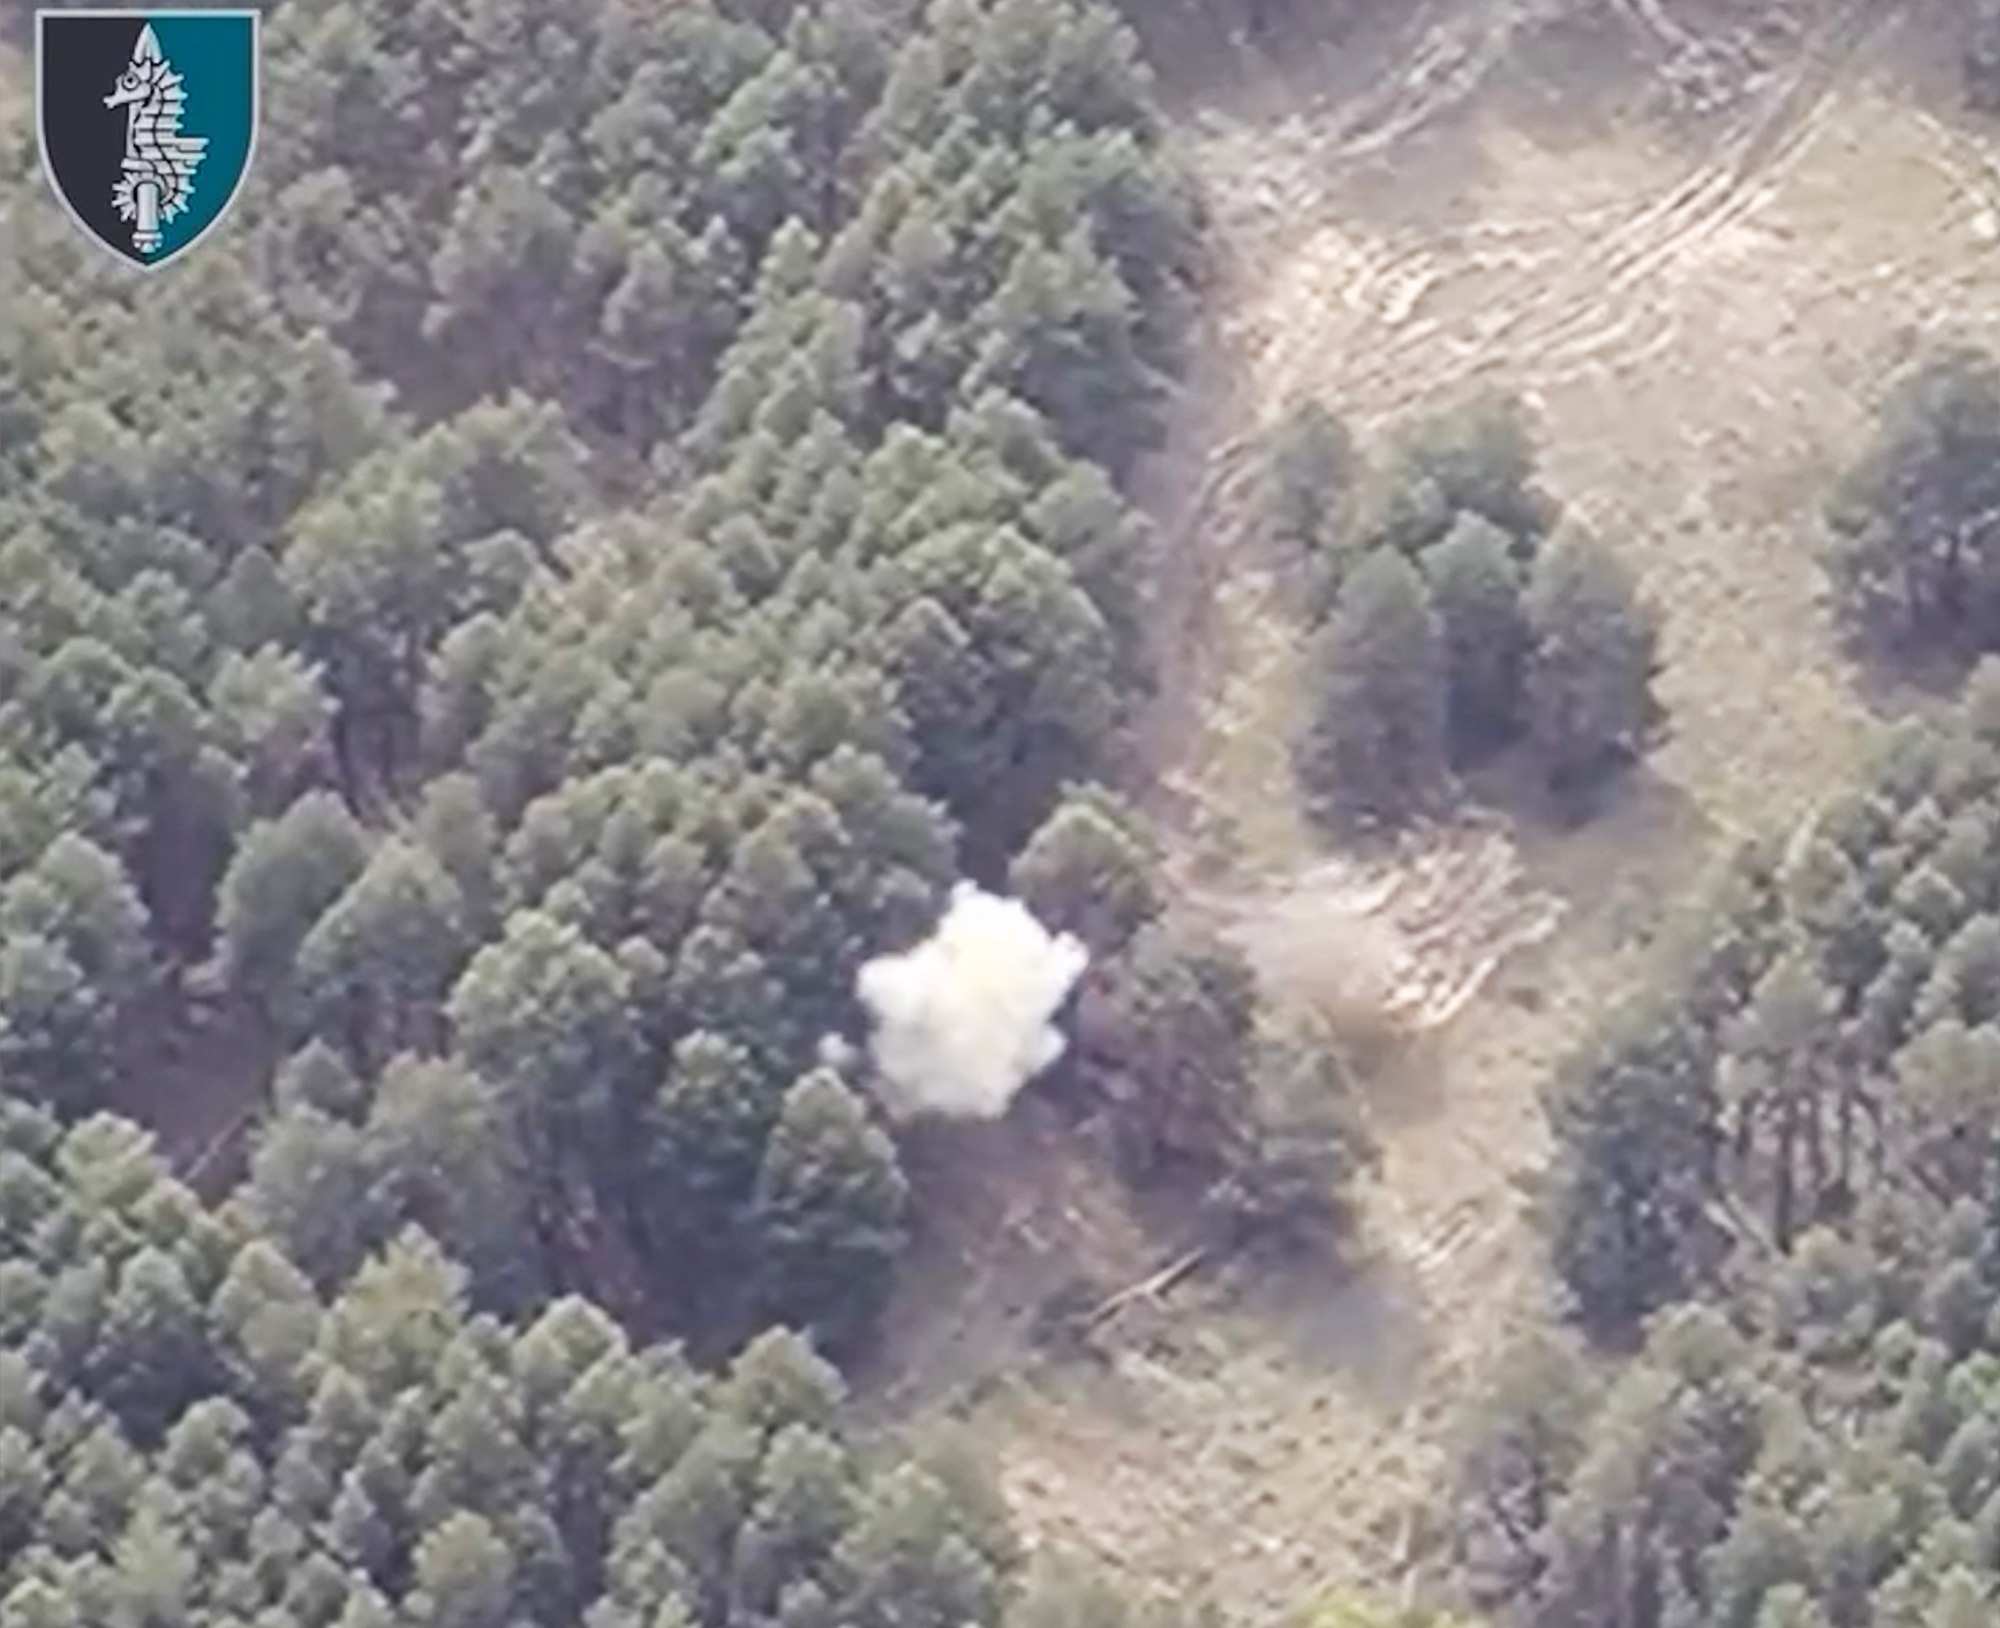 Ukrainian Special Forces Destroy Russian War Machine Using American HIMARS